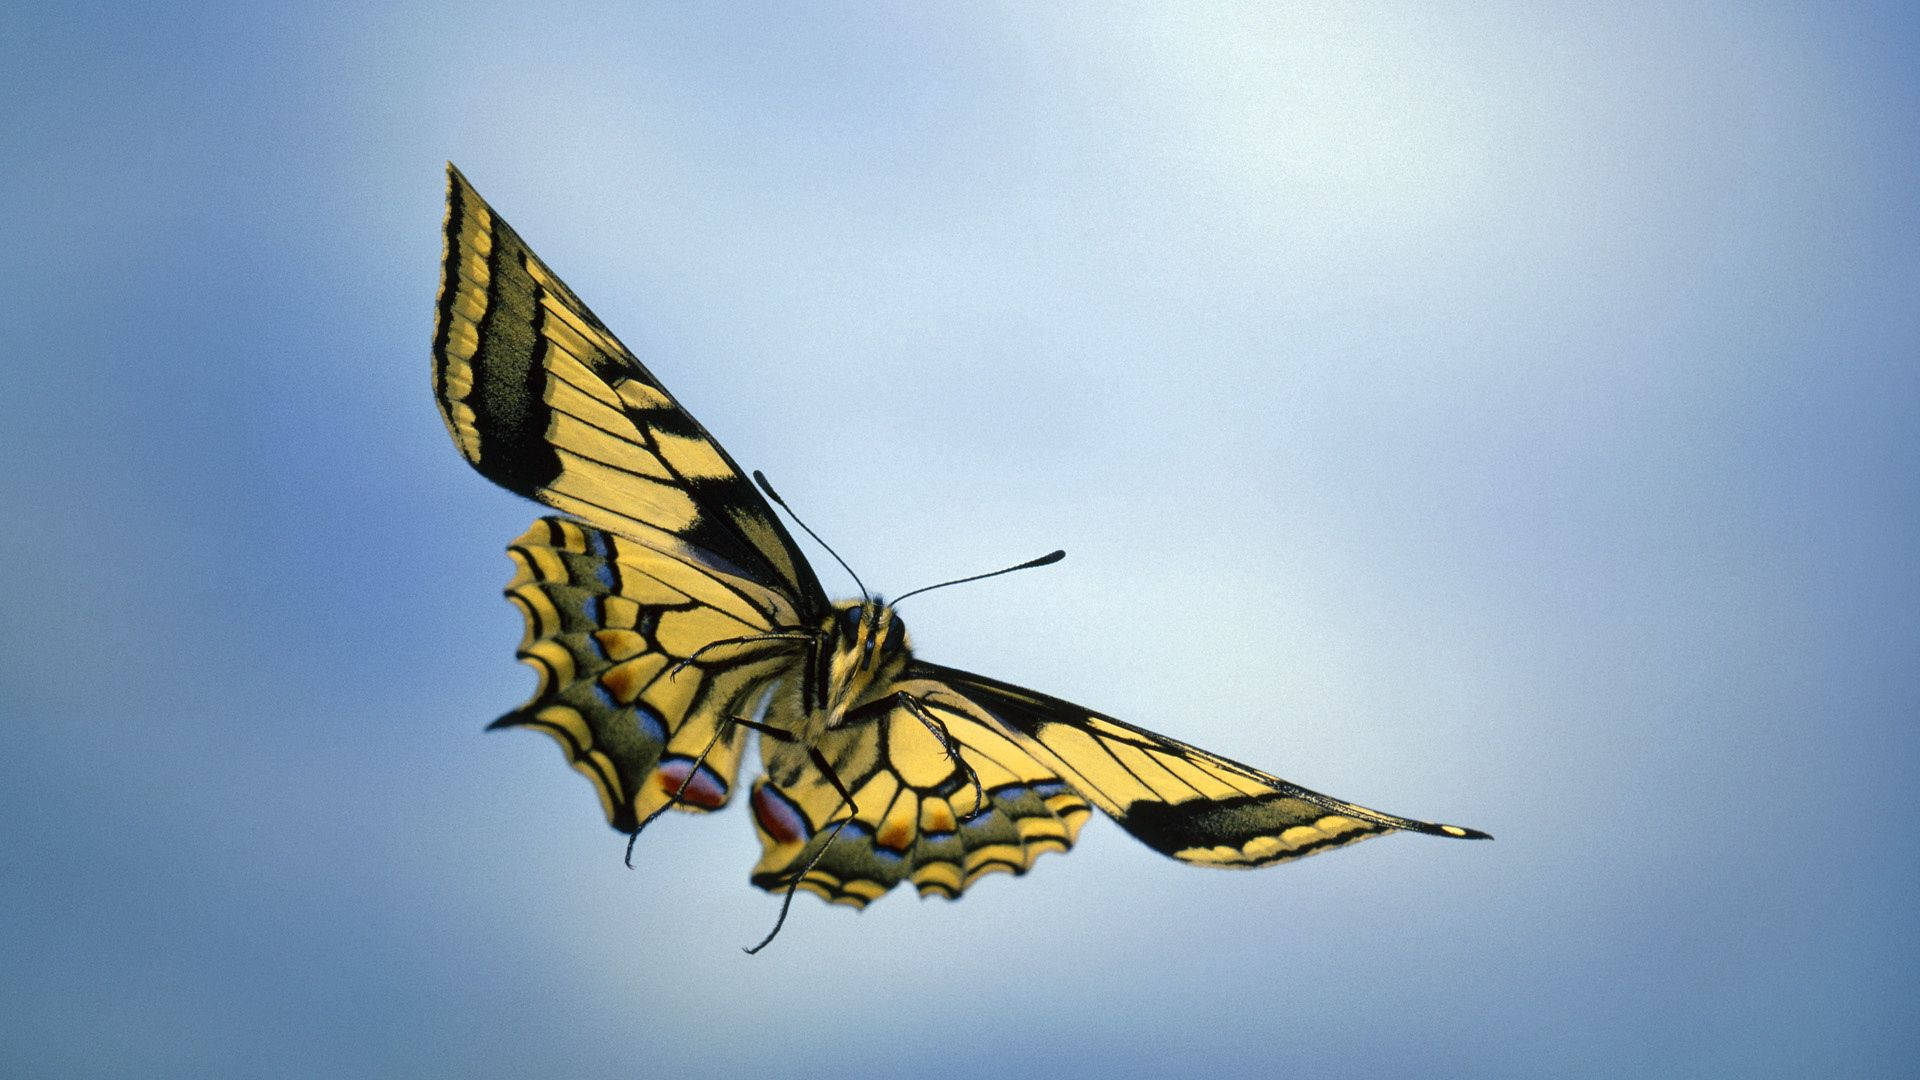 Chasing Butterfly Dreams Wallpaper